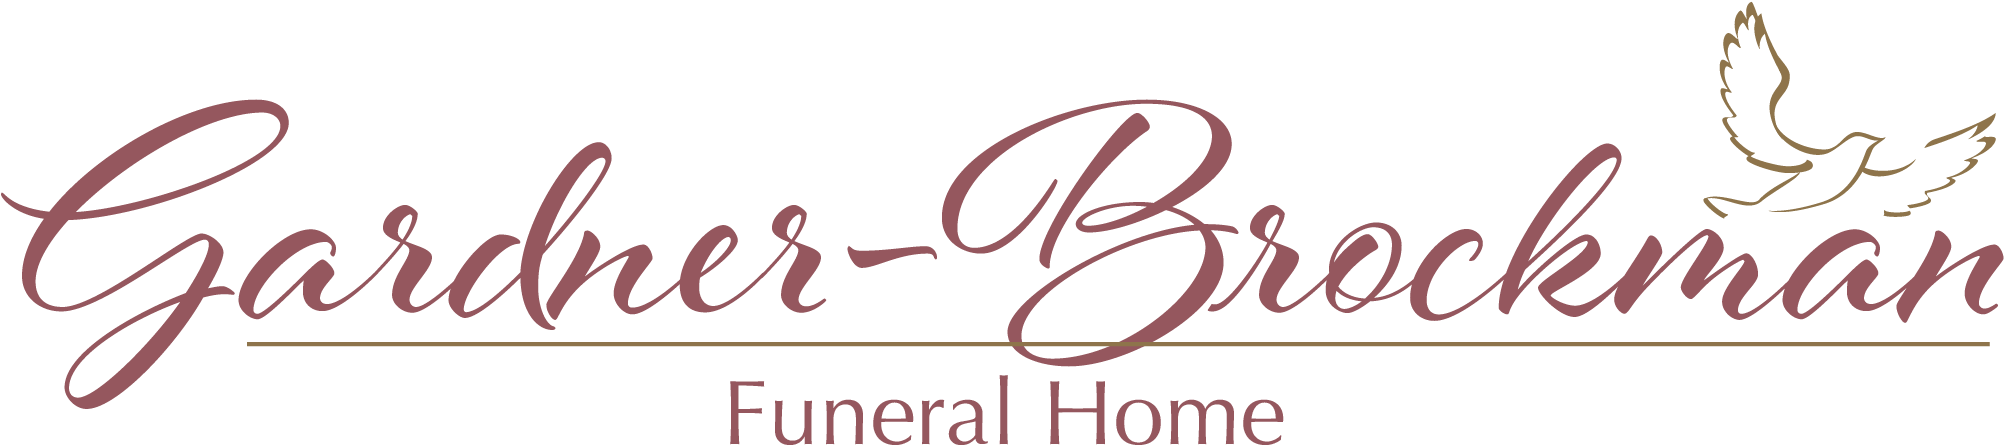 Gardner-brockman Funeral Home Logo - Gardner-brockman Funeral Home (2016x496), Png Download